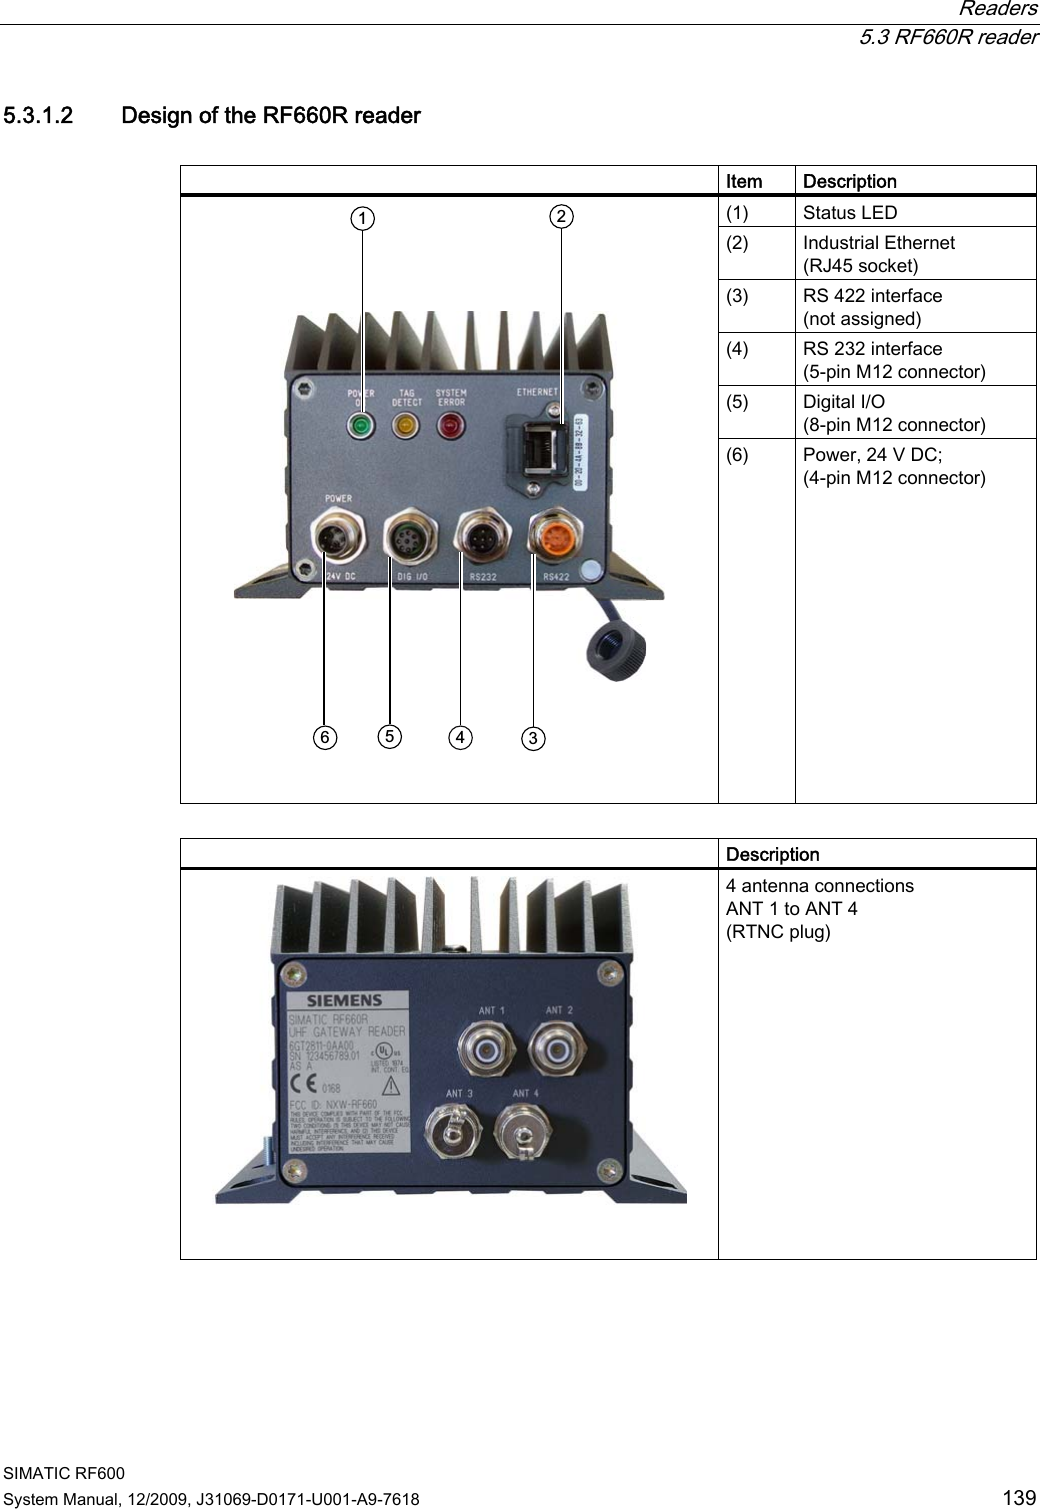  Readers  5.3 RF660R reader SIMATIC RF600 System Manual, 12/2009, J31069-D0171-U001-A9-7618  139 5.3.1.2 Design of the RF660R reader    Item  Description (1)  Status LED (2)  Industrial Ethernet  (RJ45 socket) (3)  RS 422 interface  (not assigned) (4)  RS 232 interface  (5-pin M12 connector) (5)  Digital I/O  (8-pin M12 connector)     (6)  Power, 24 V DC; (4-pin M12 connector)    Description    4 antenna connections ANT 1 to ANT 4  (RTNC plug)  